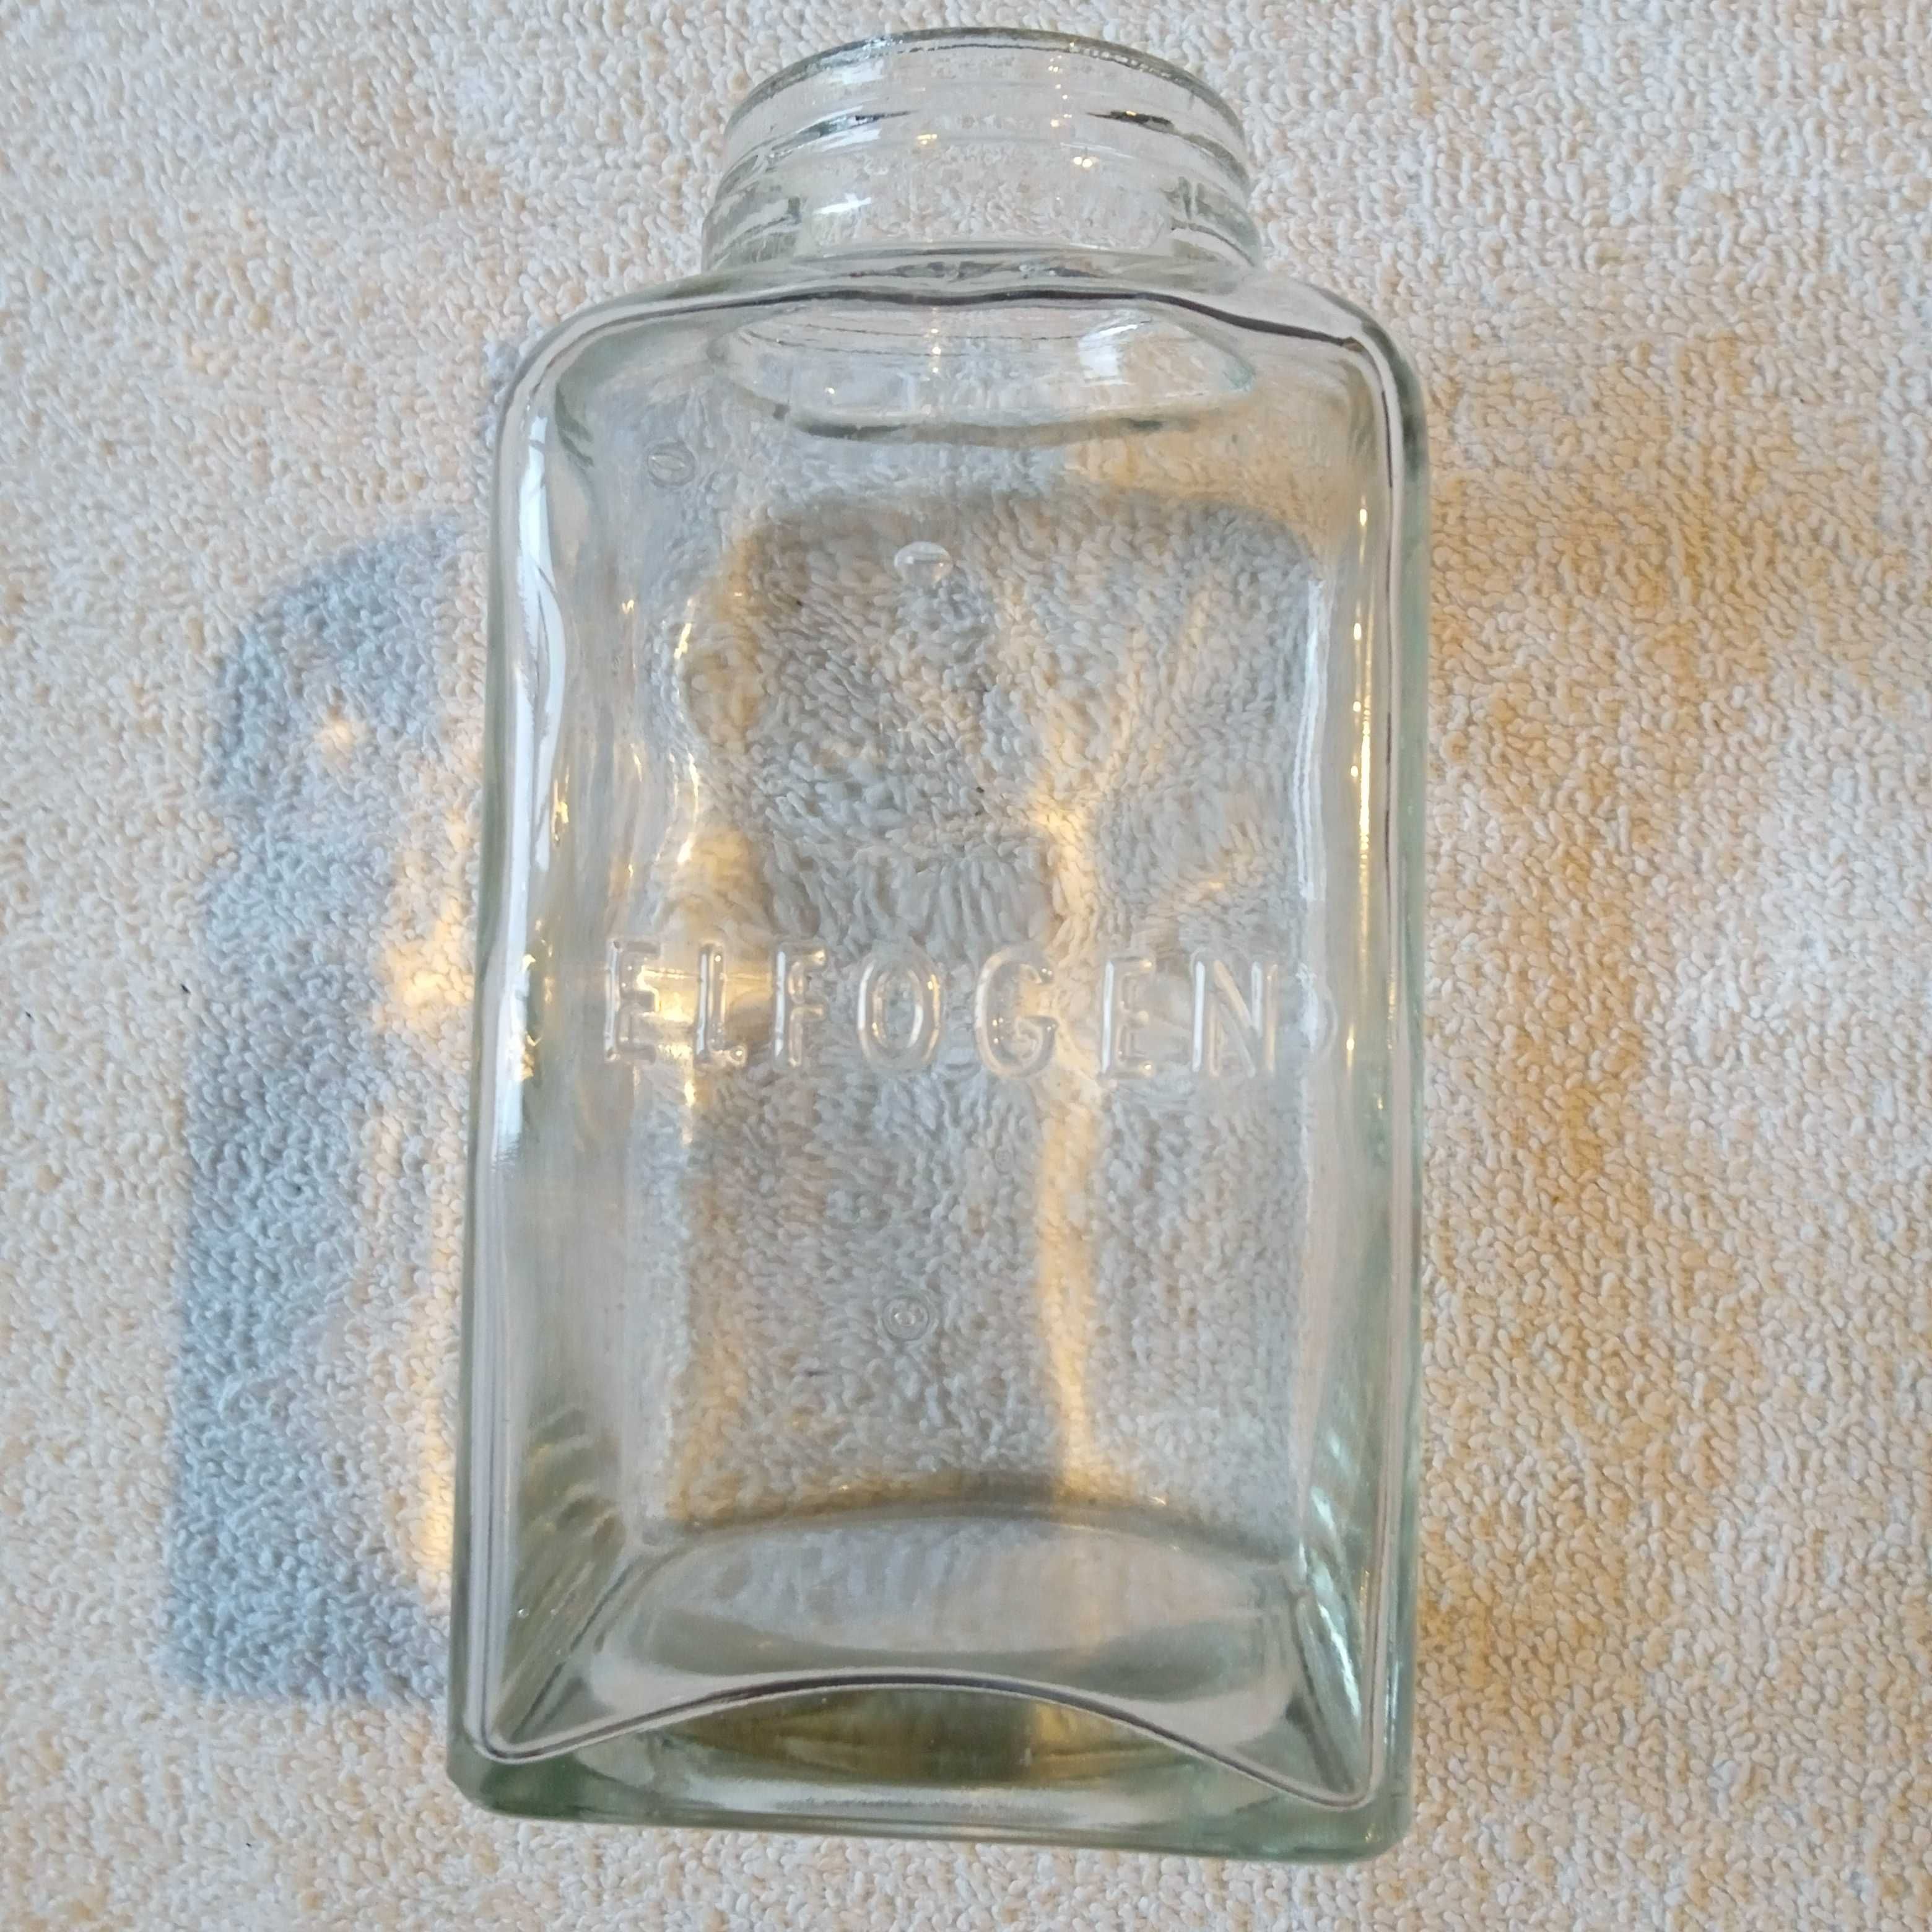 Zabytkowa butelka apteczna z tłoczonym napisem Elfogen.